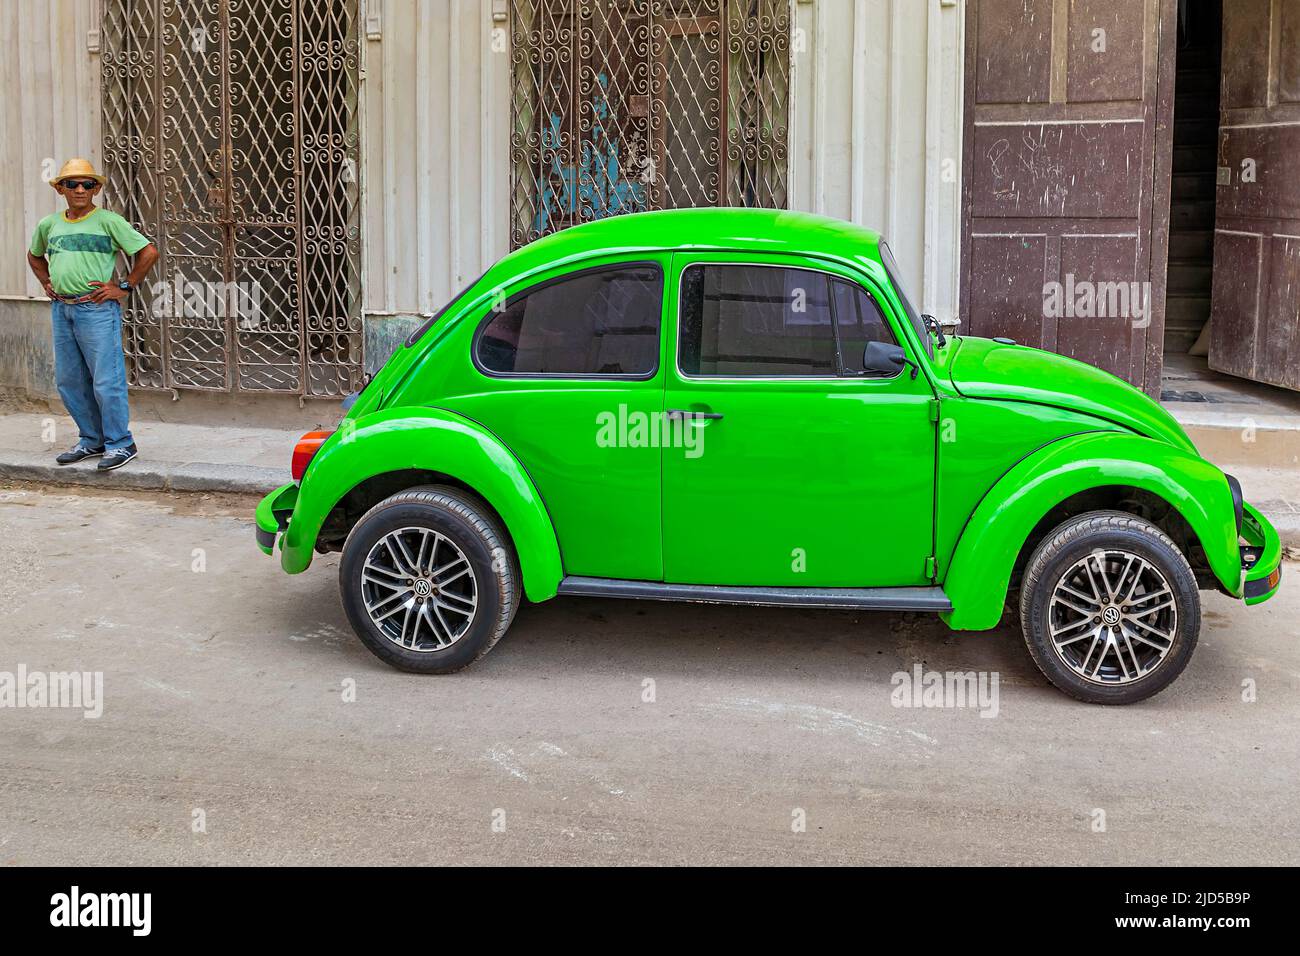 Verde brillante Vintage Volkswagen Beetle e uomo cubano in verde T-shirt nelle strade di Old Havana, Cuba Foto Stock